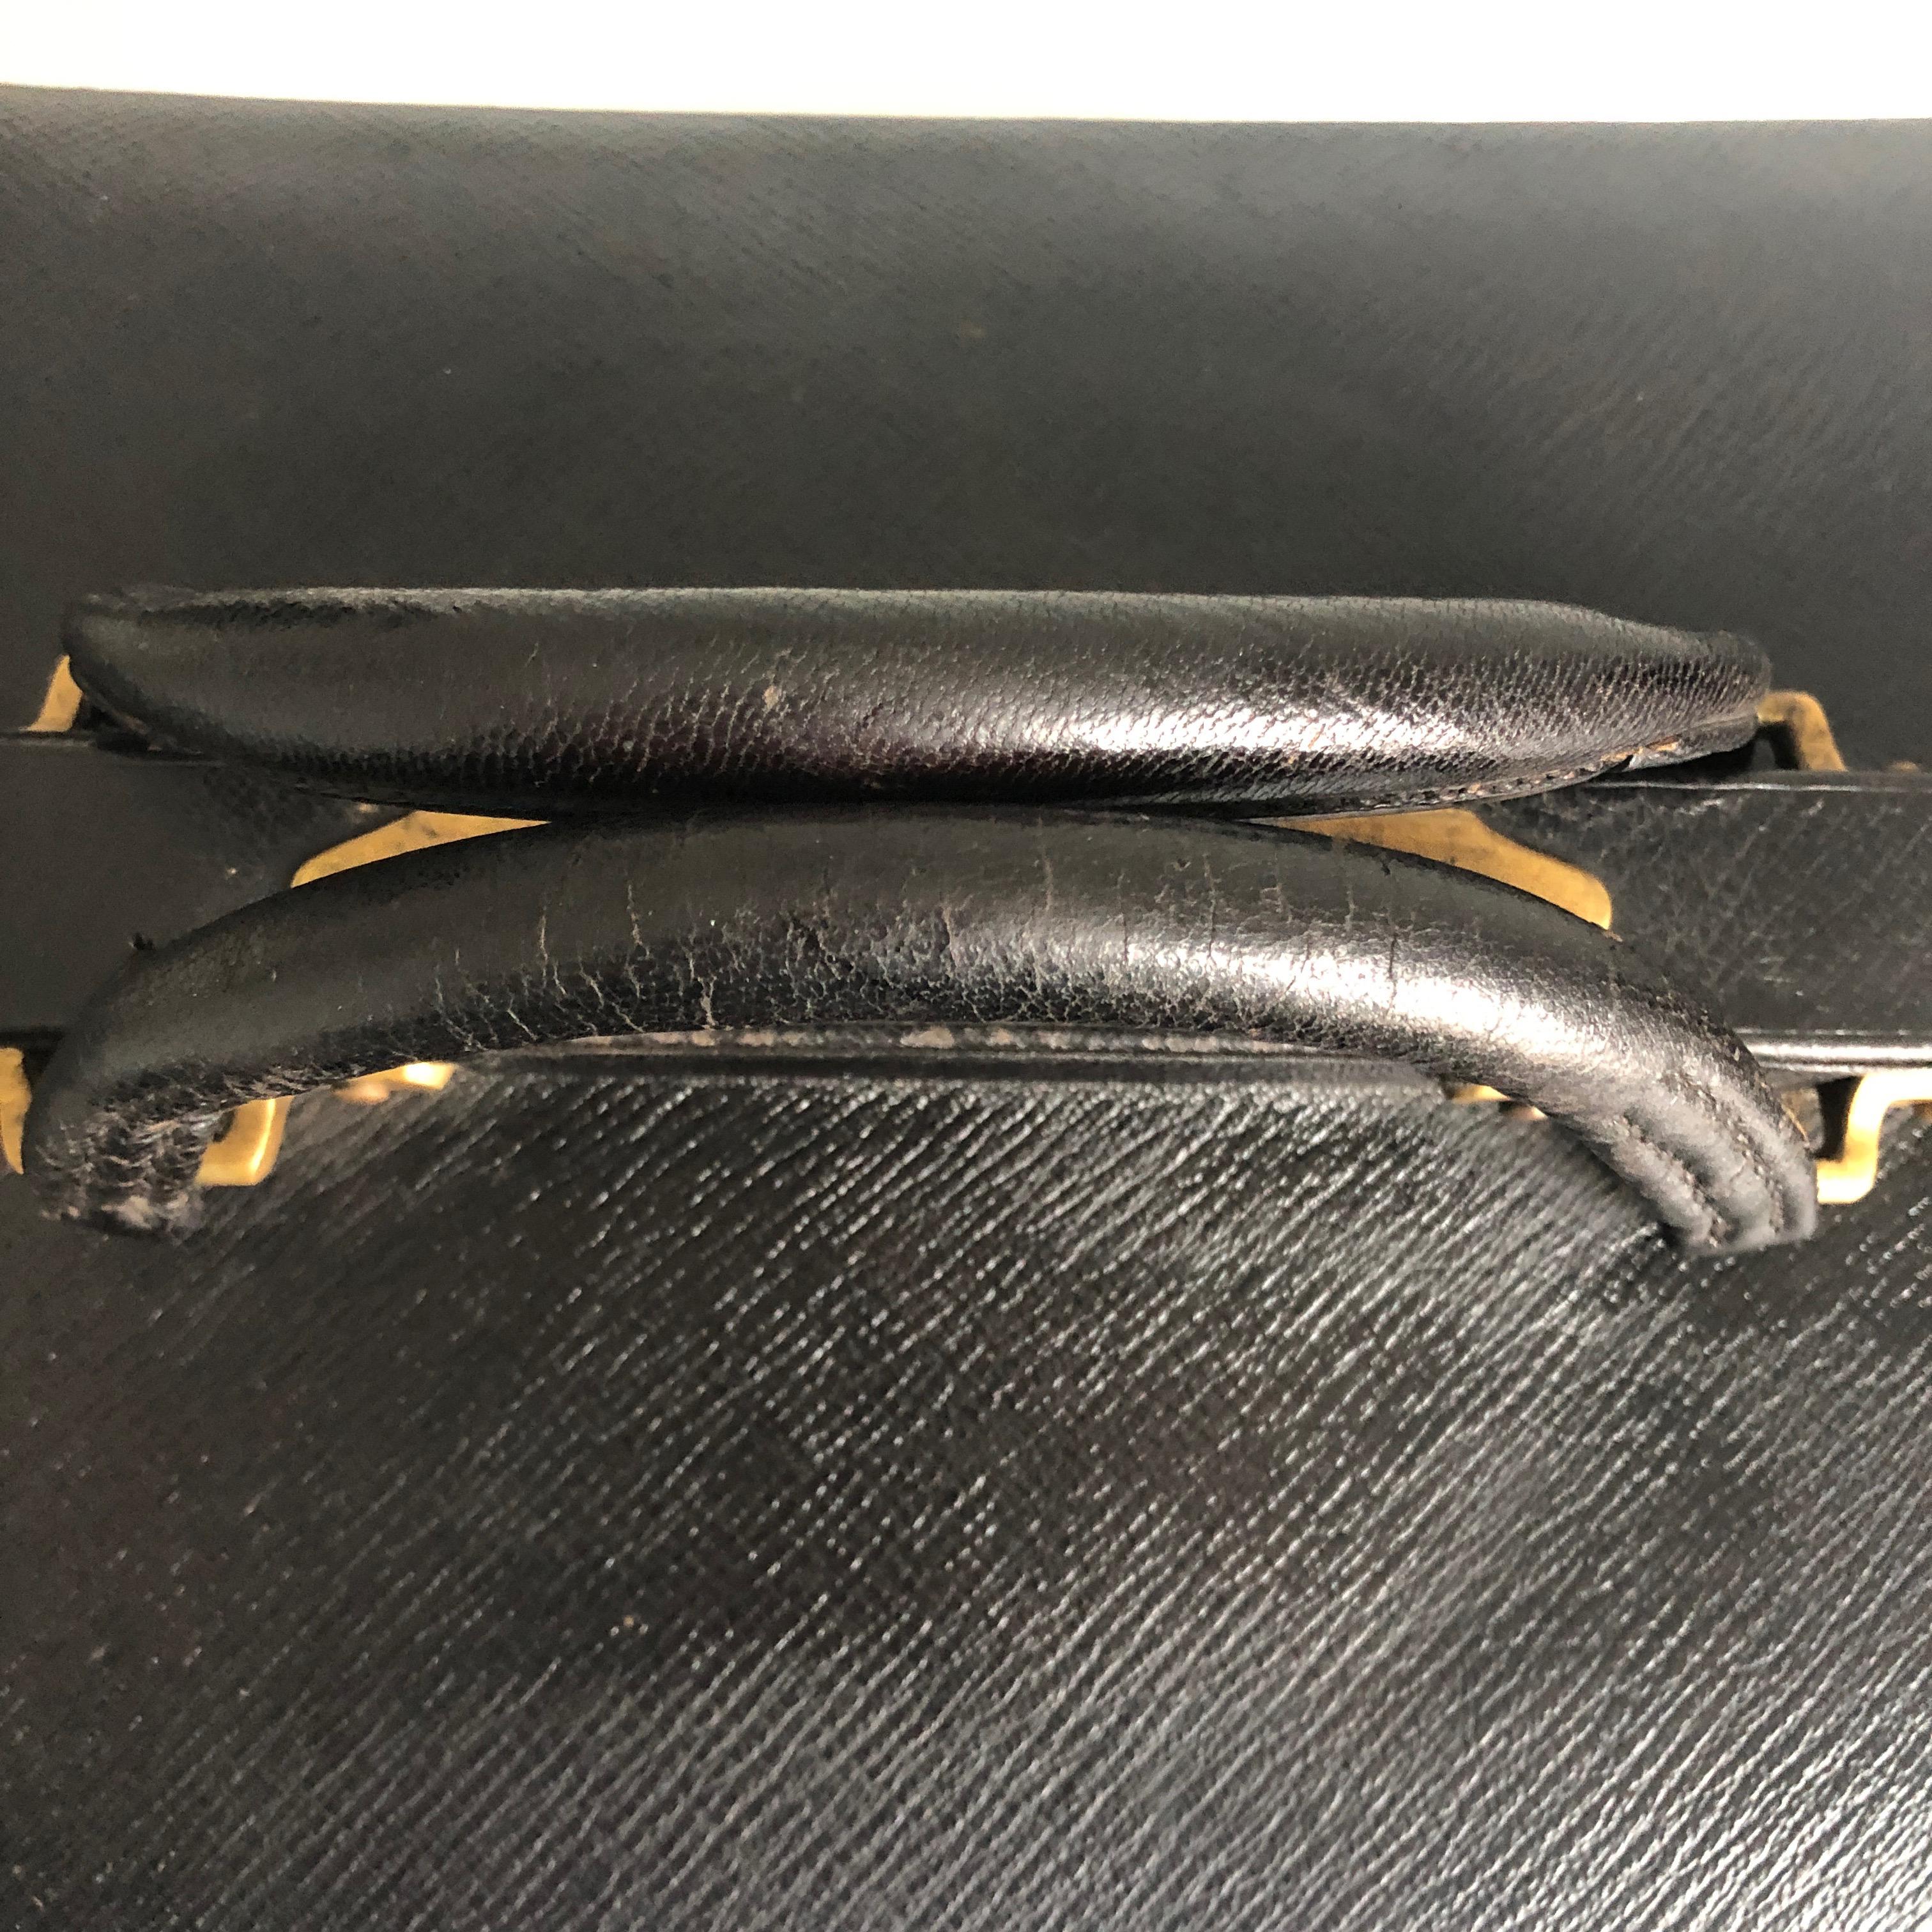 Louis Vuitton Doctors Bag Sac Cabine Rare Antique Travel Case Black Early 20th C For Sale 7